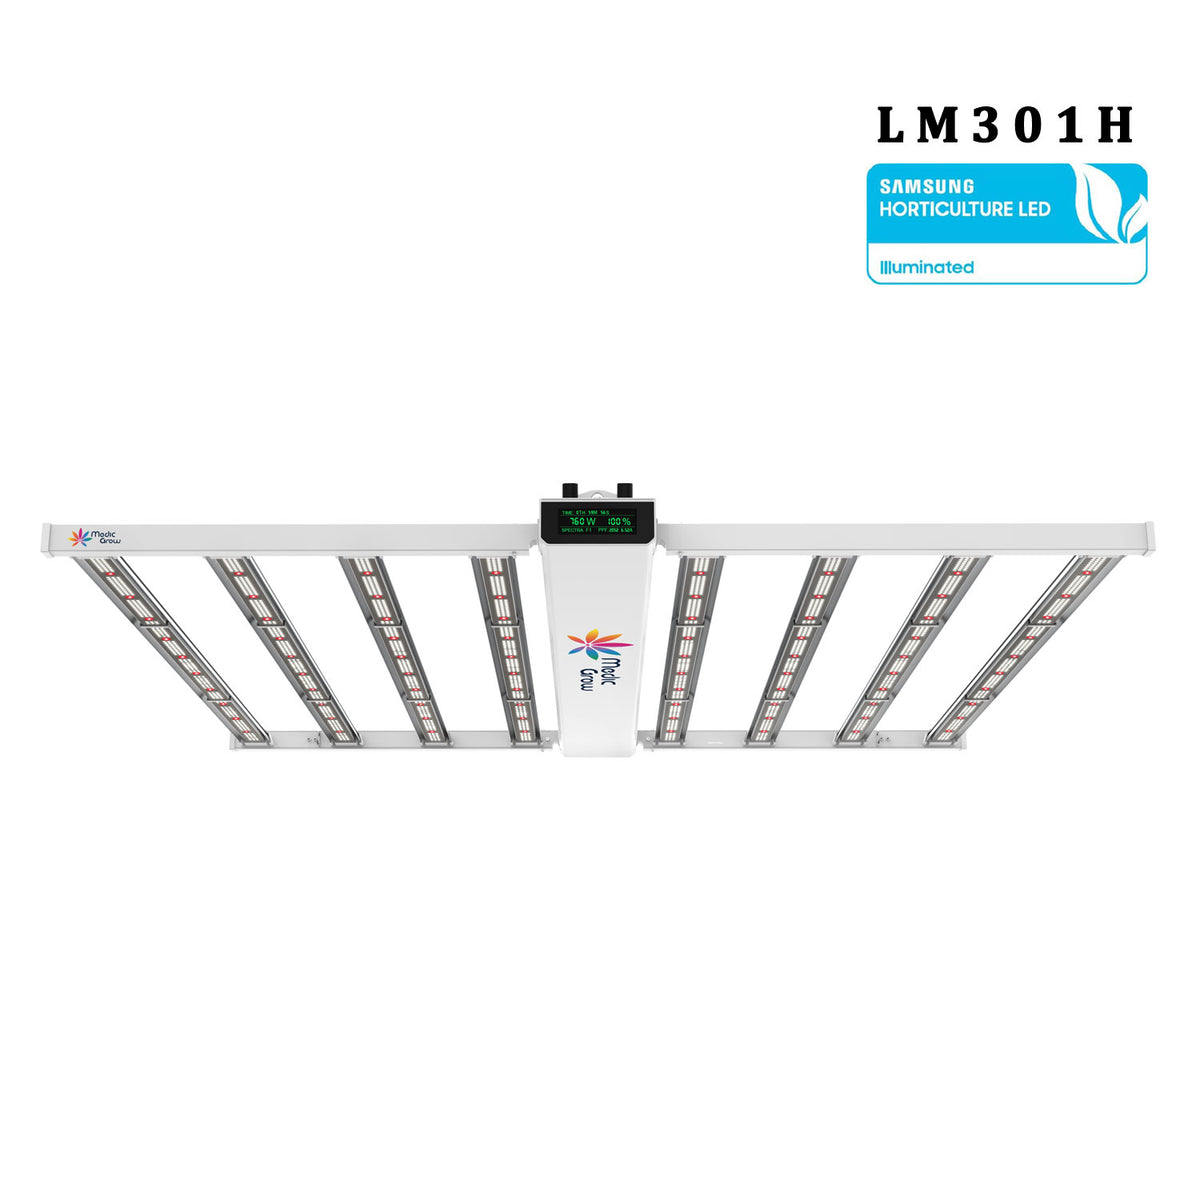 IONBEAM S11, Full Spectrum LED Grow Light Bars, Samsung LM301H, 11-Inch